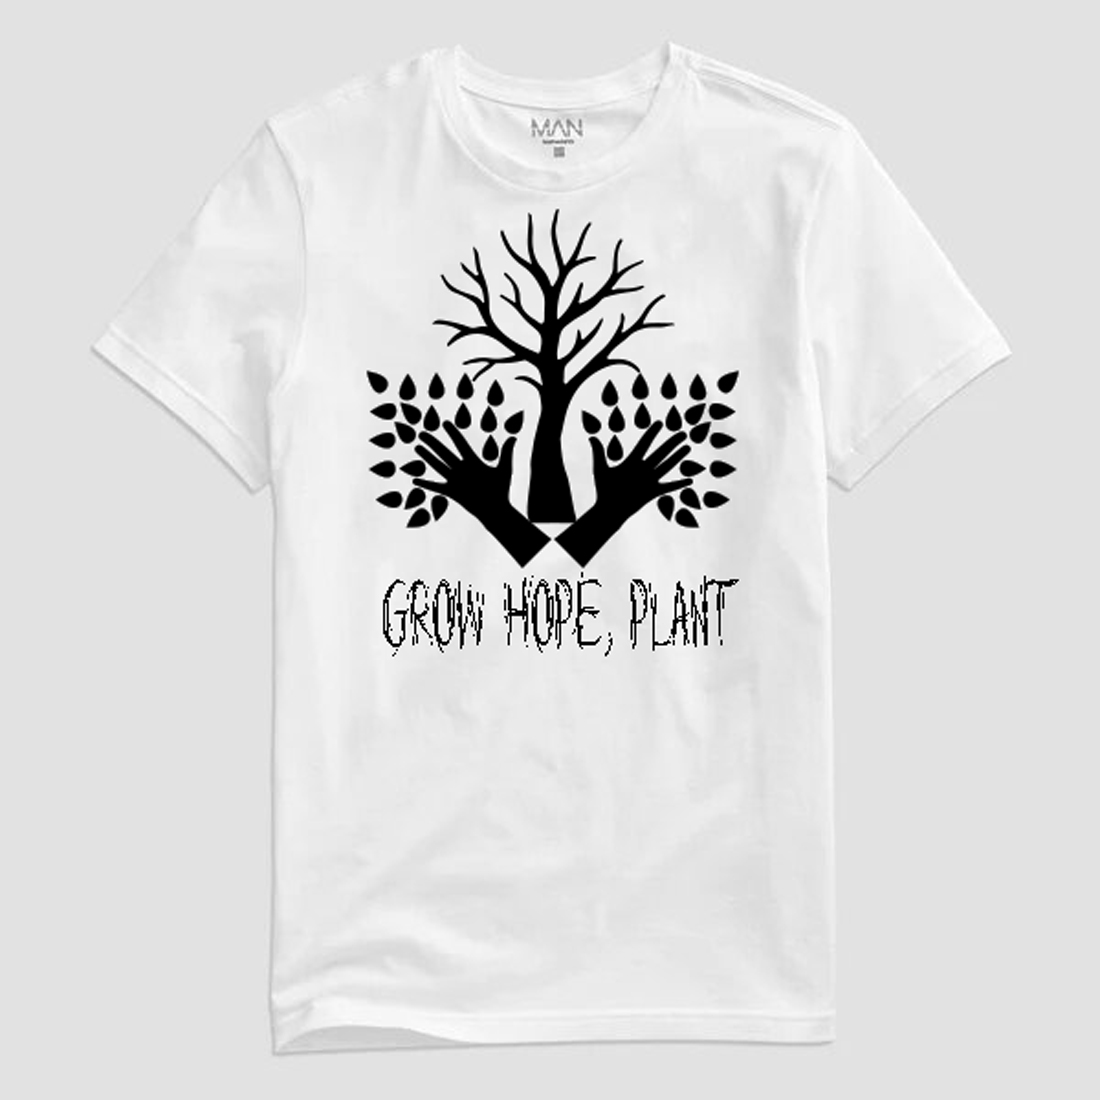 Grow Hope Plant - TShirt Print Design cover image.